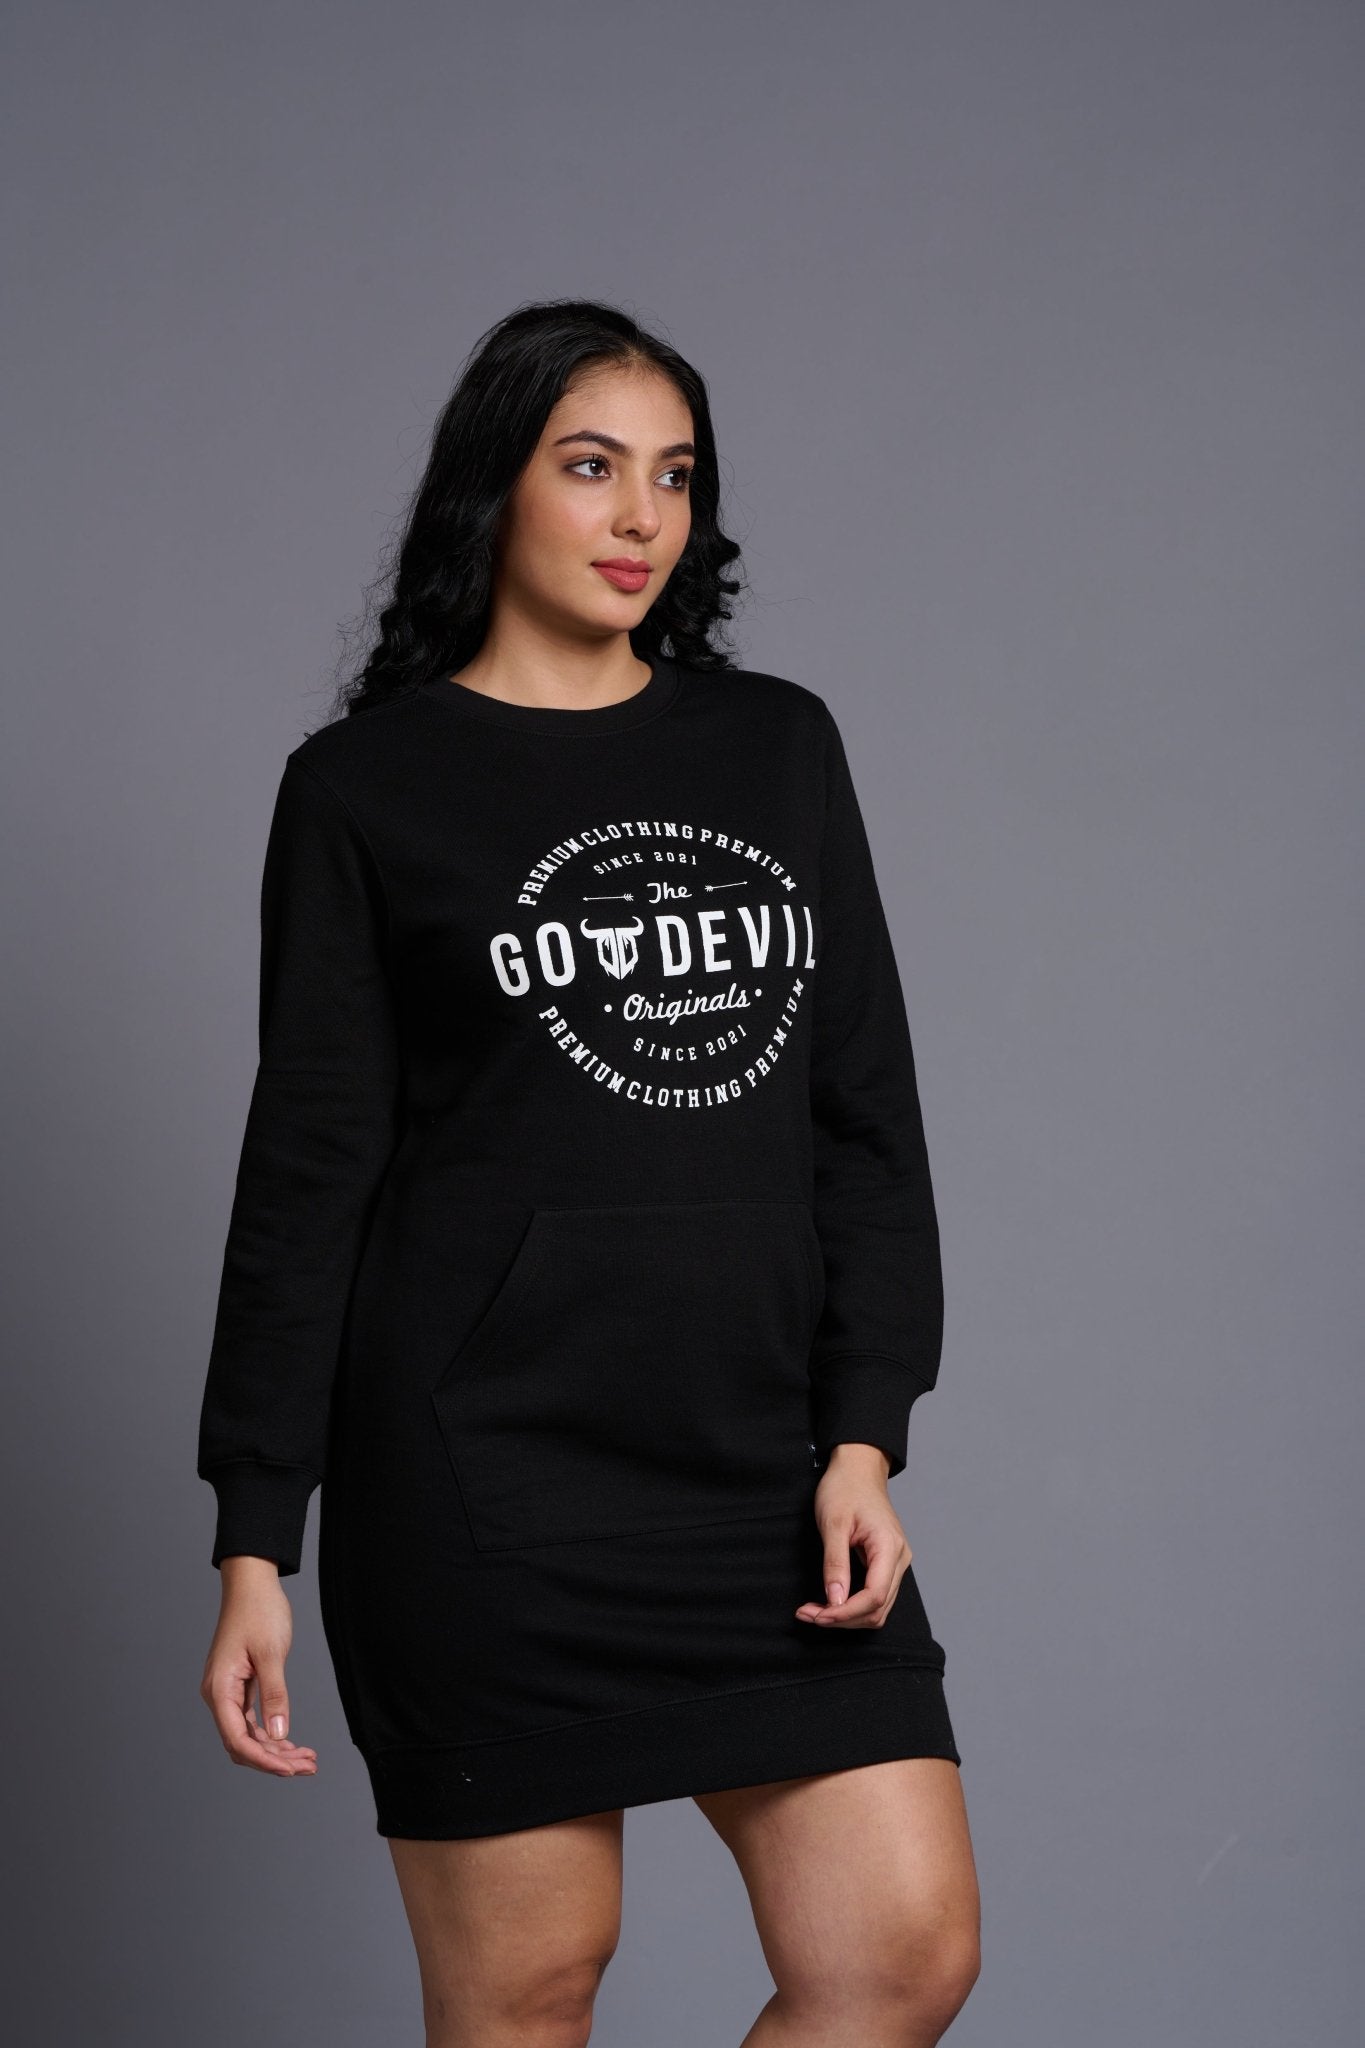 Go Devil Originals (in White) Printed Black Sweatdress for Women - Go Devil